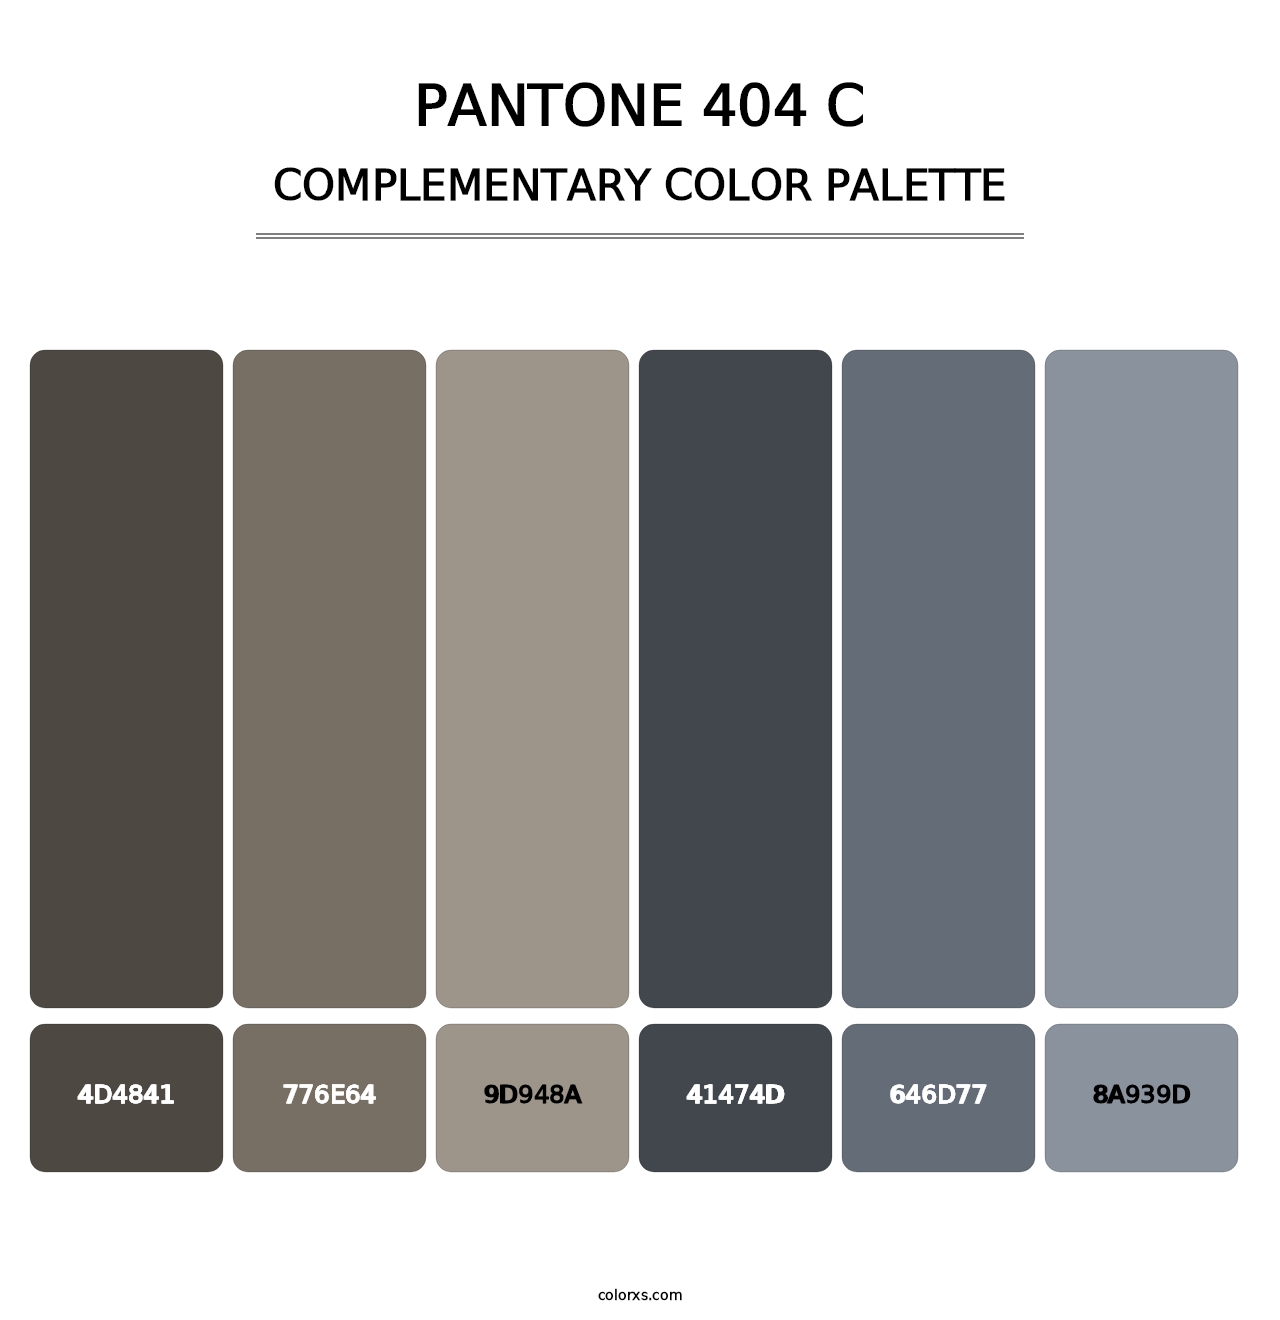 PANTONE 404 C - Complementary Color Palette